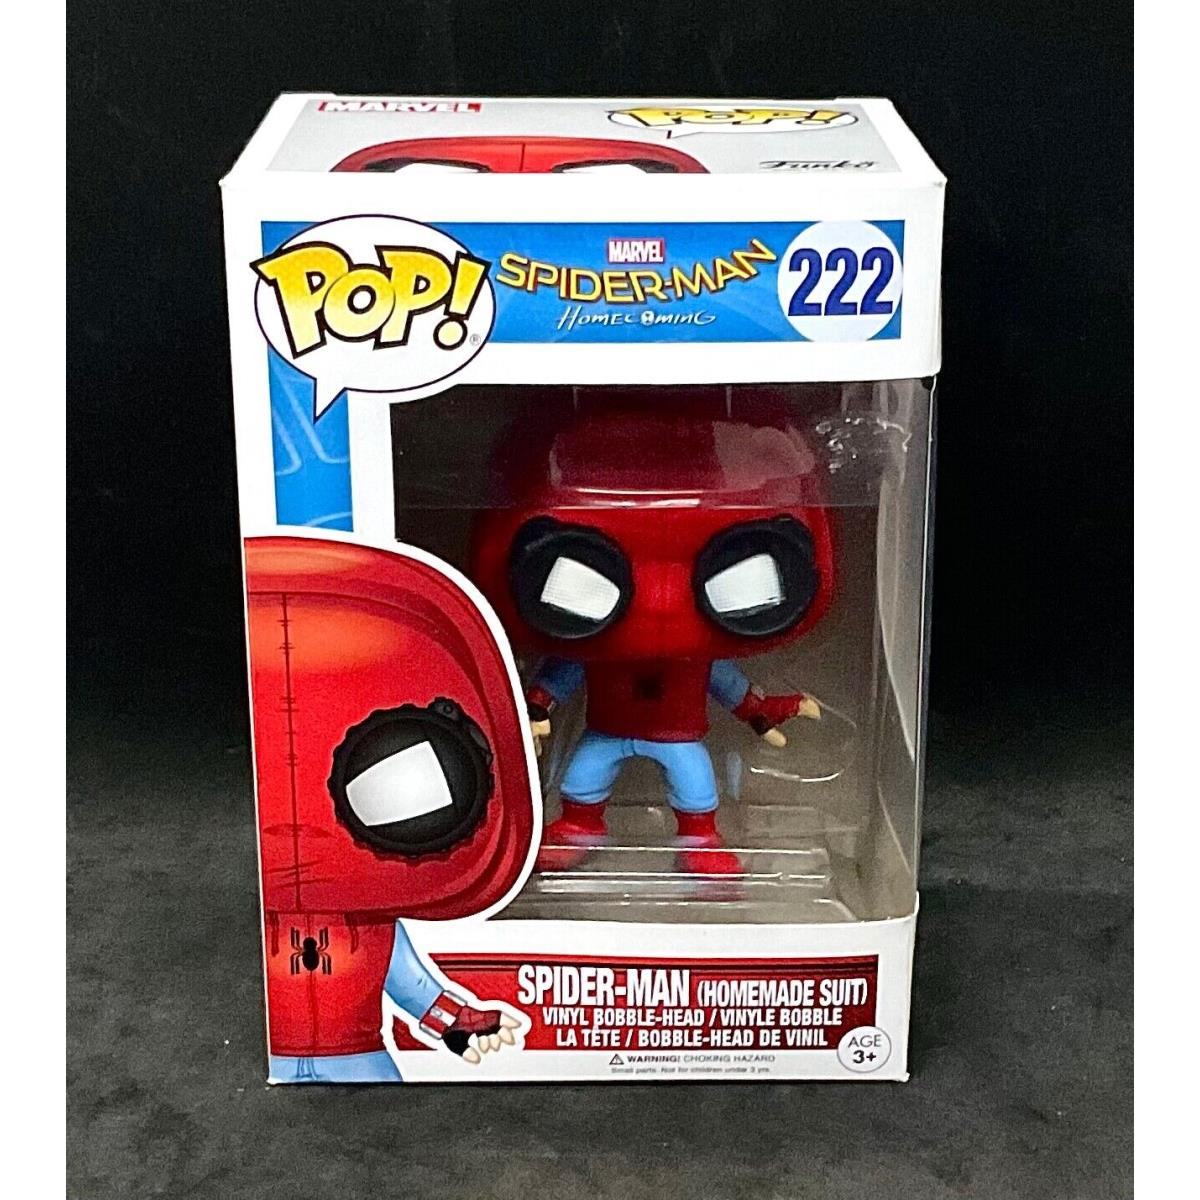 Funko Pop Marvel Spider-man Homecoming Spider-man Homemade Suit 222